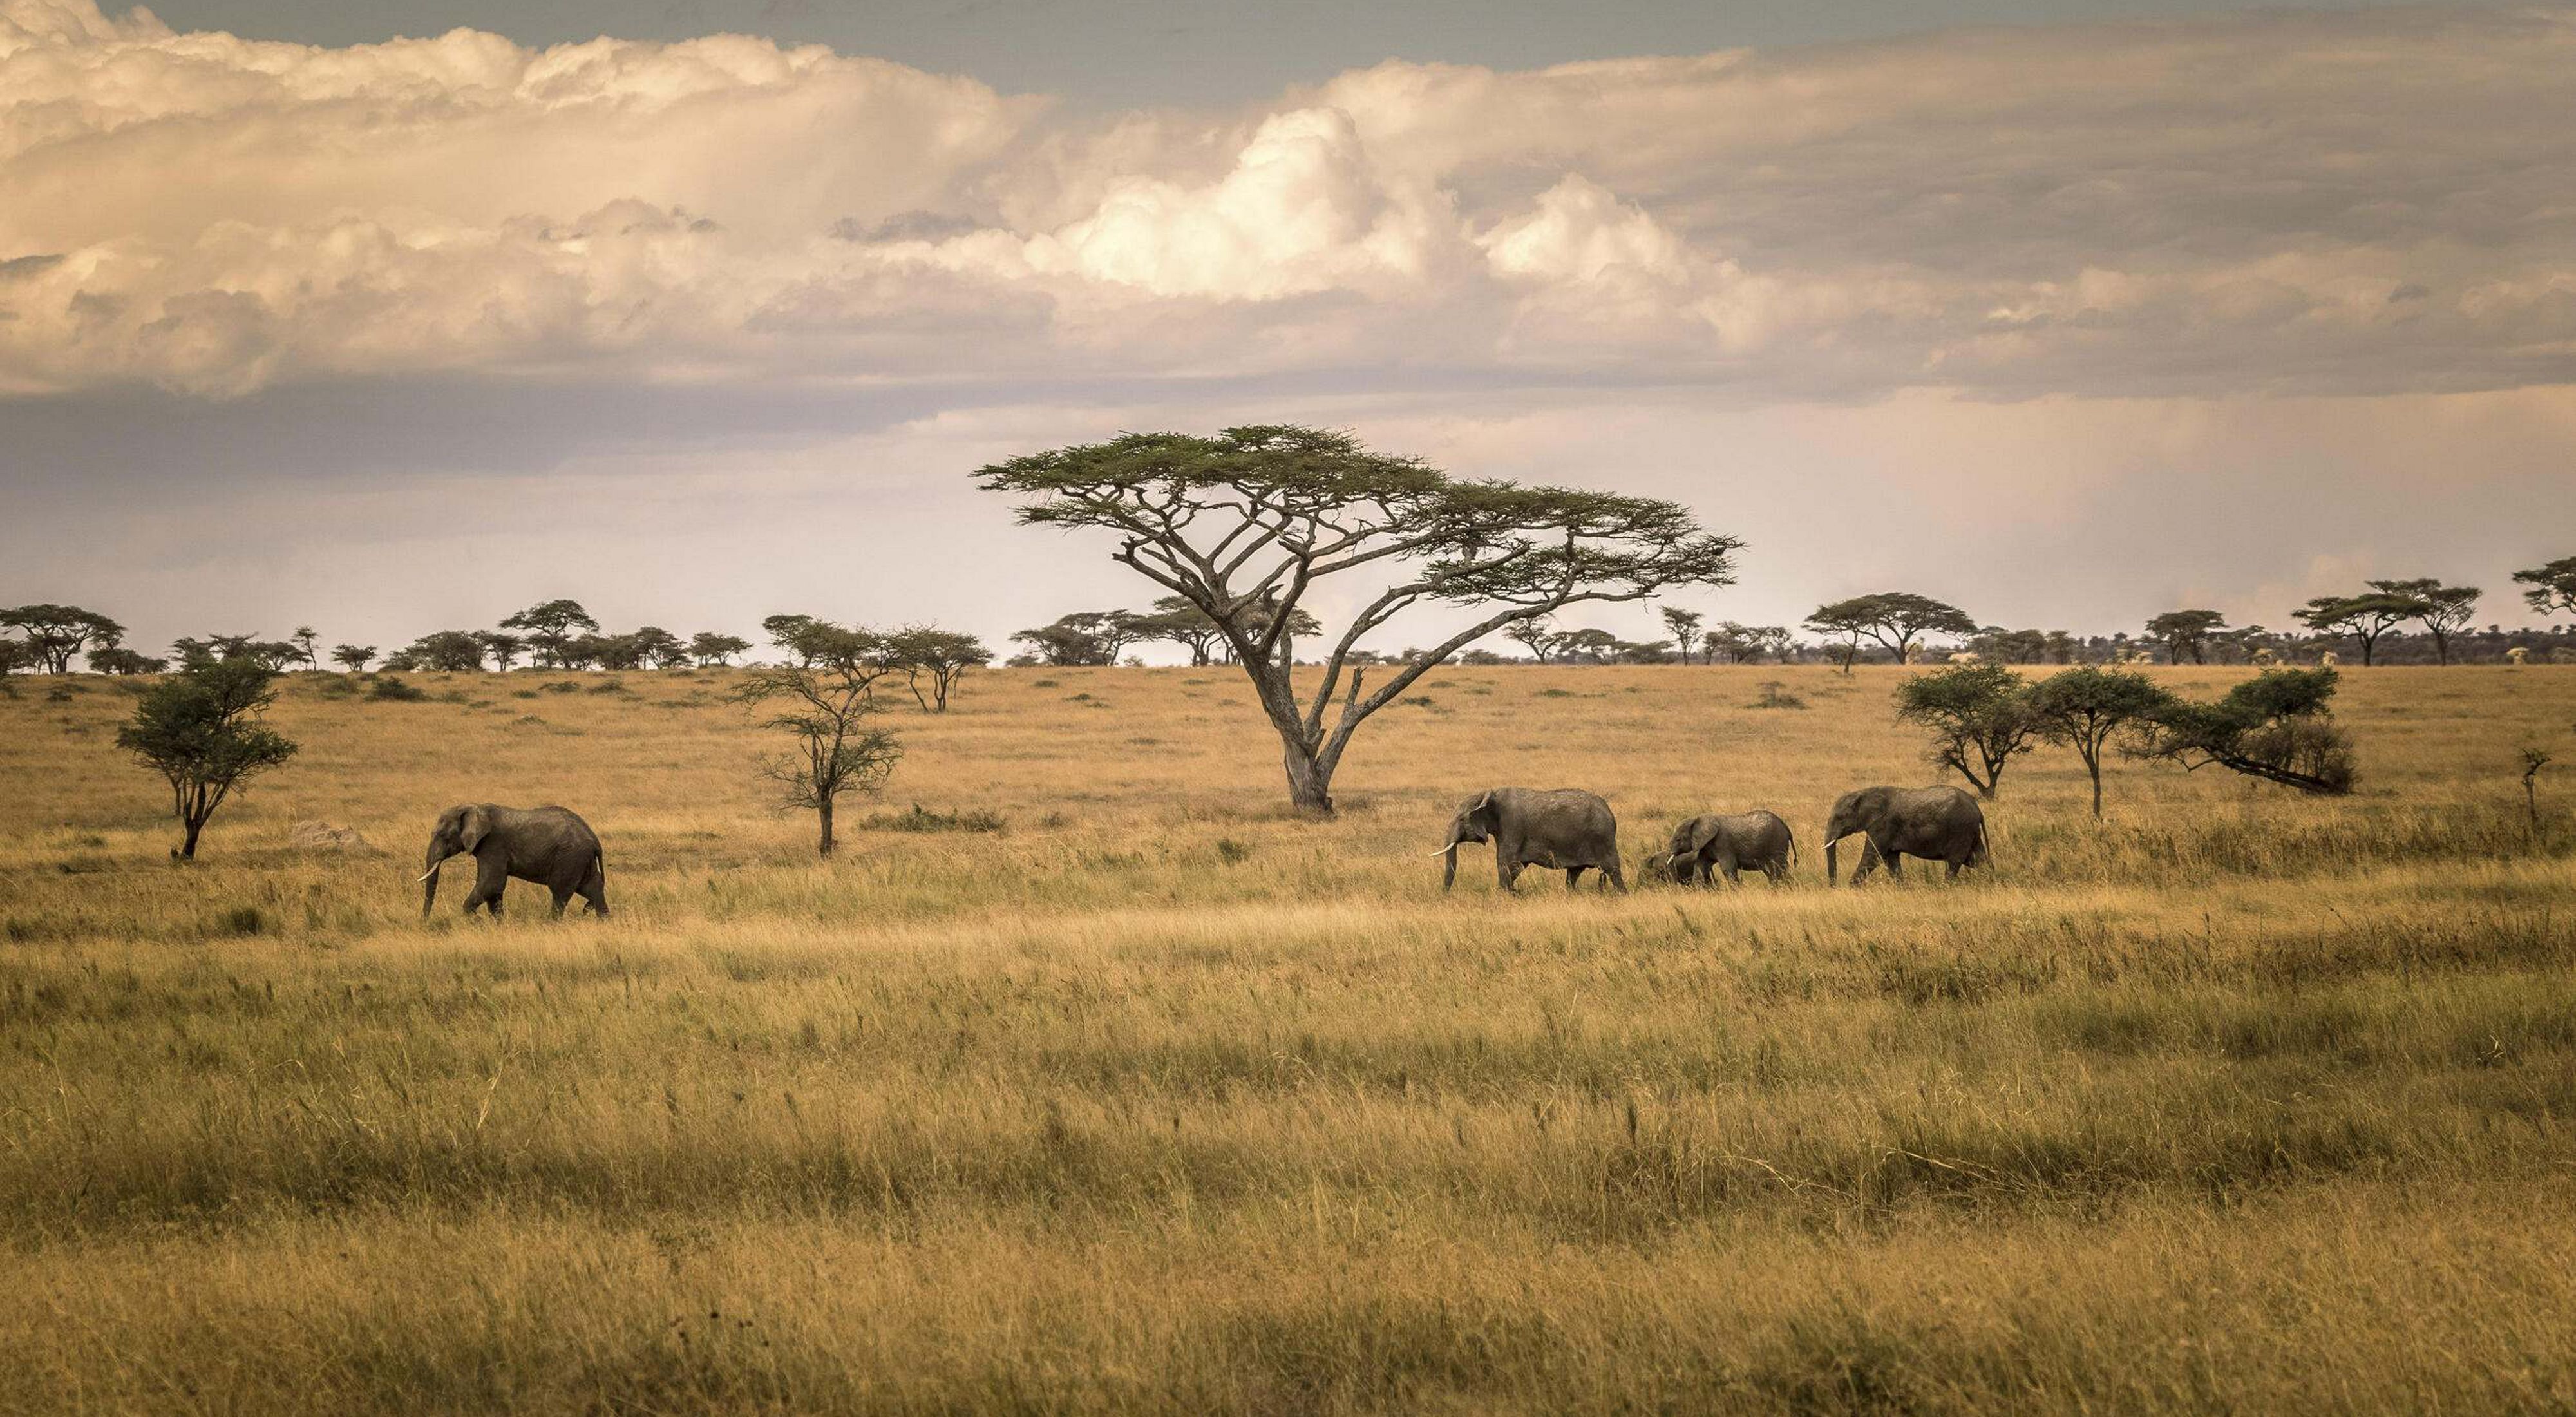 Elephants walking through the grasslands